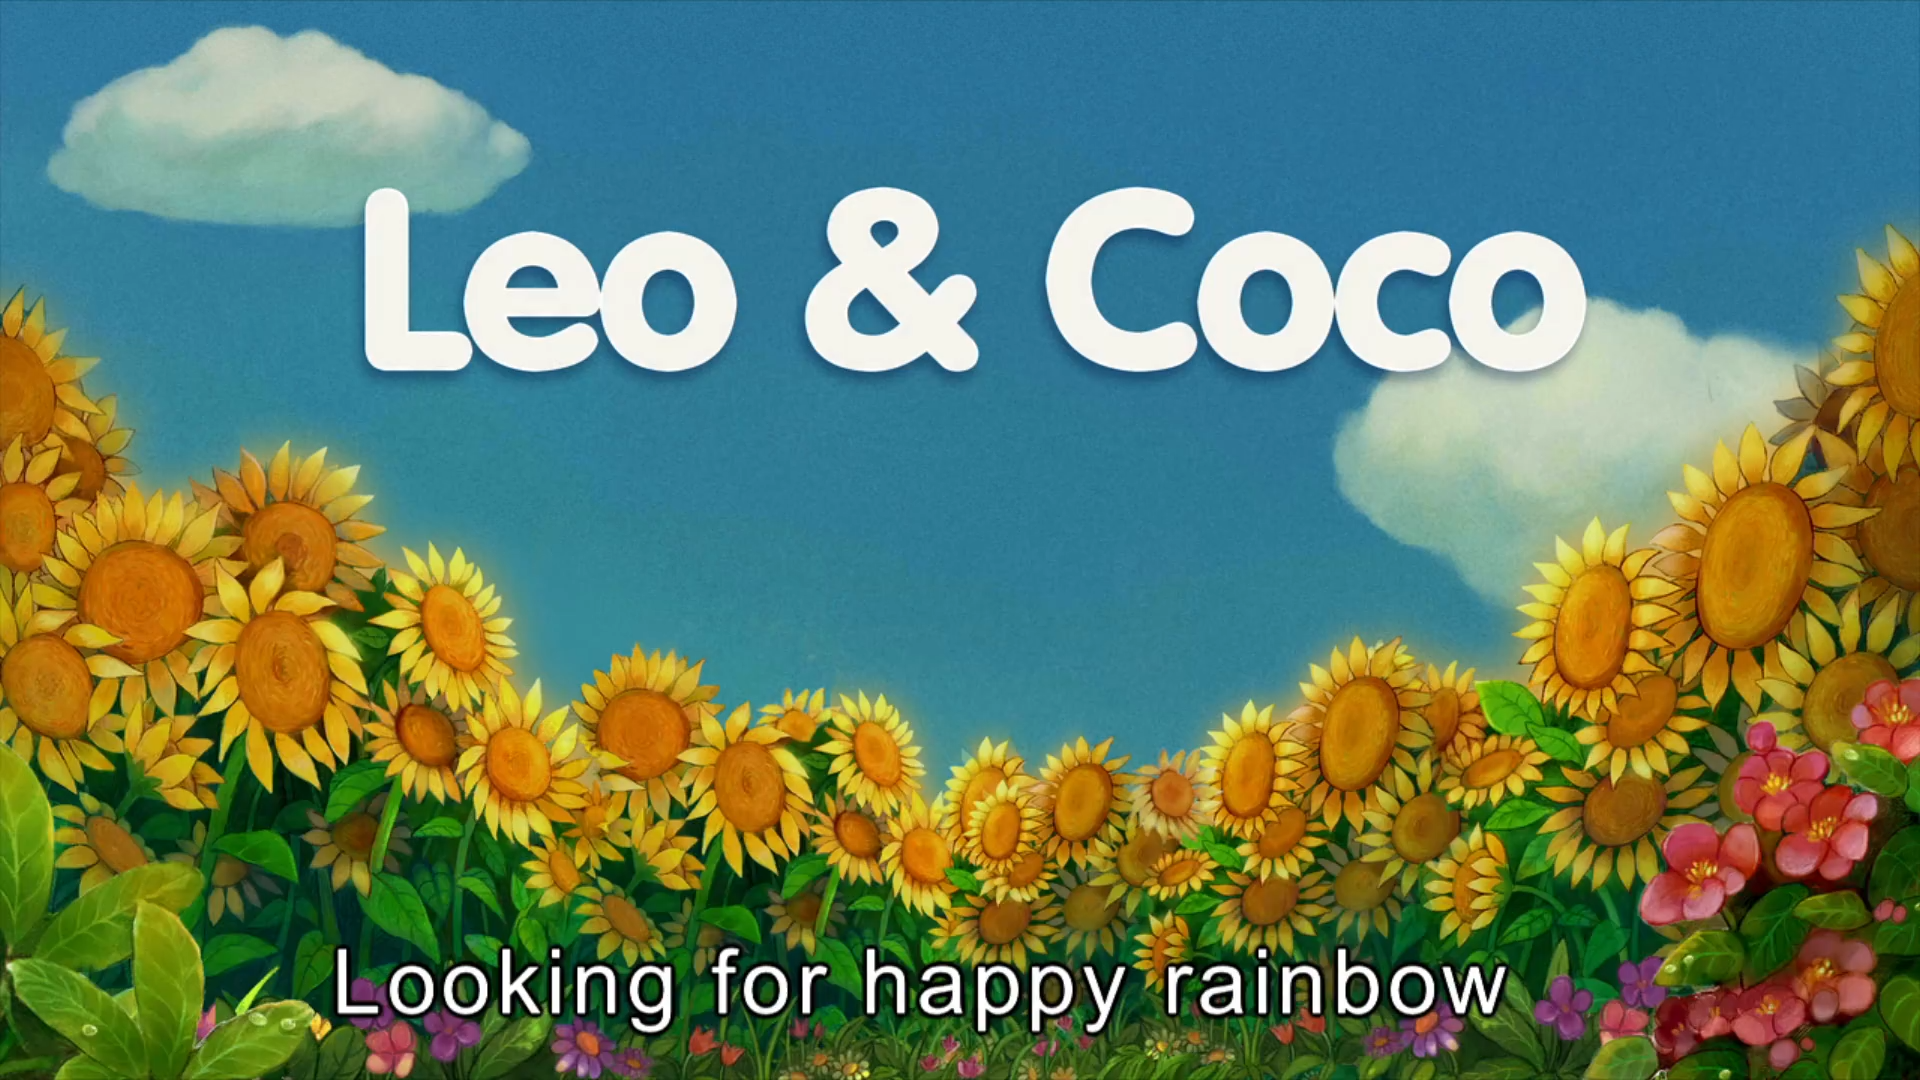 Leo & Coco米乐米可之美语时光英文版，全48集，1080P高清视频带英文字幕，百度网盘下载！ | 继续淘